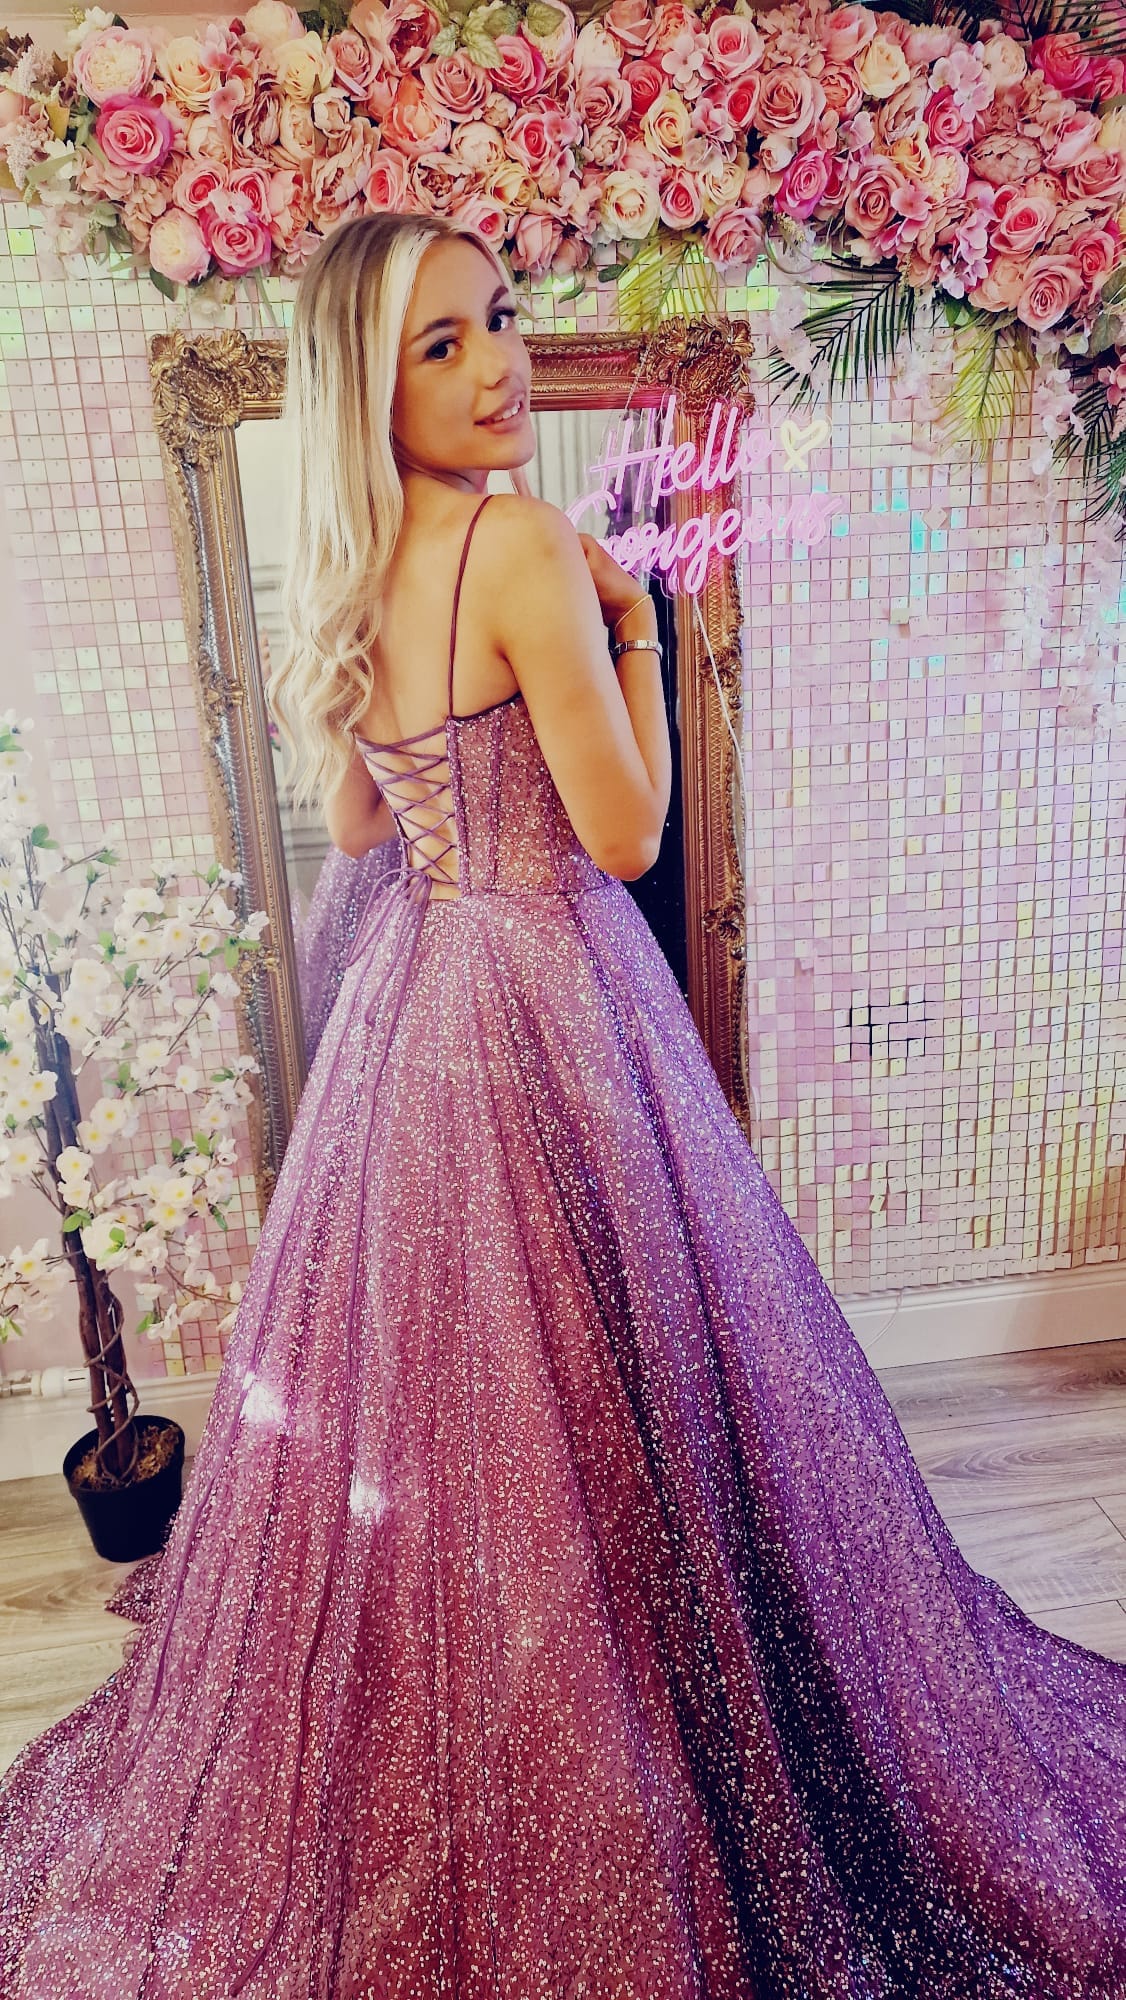 Tiarna Lilac Glitter Laced Up Back Ballgown Formal Prom Dress